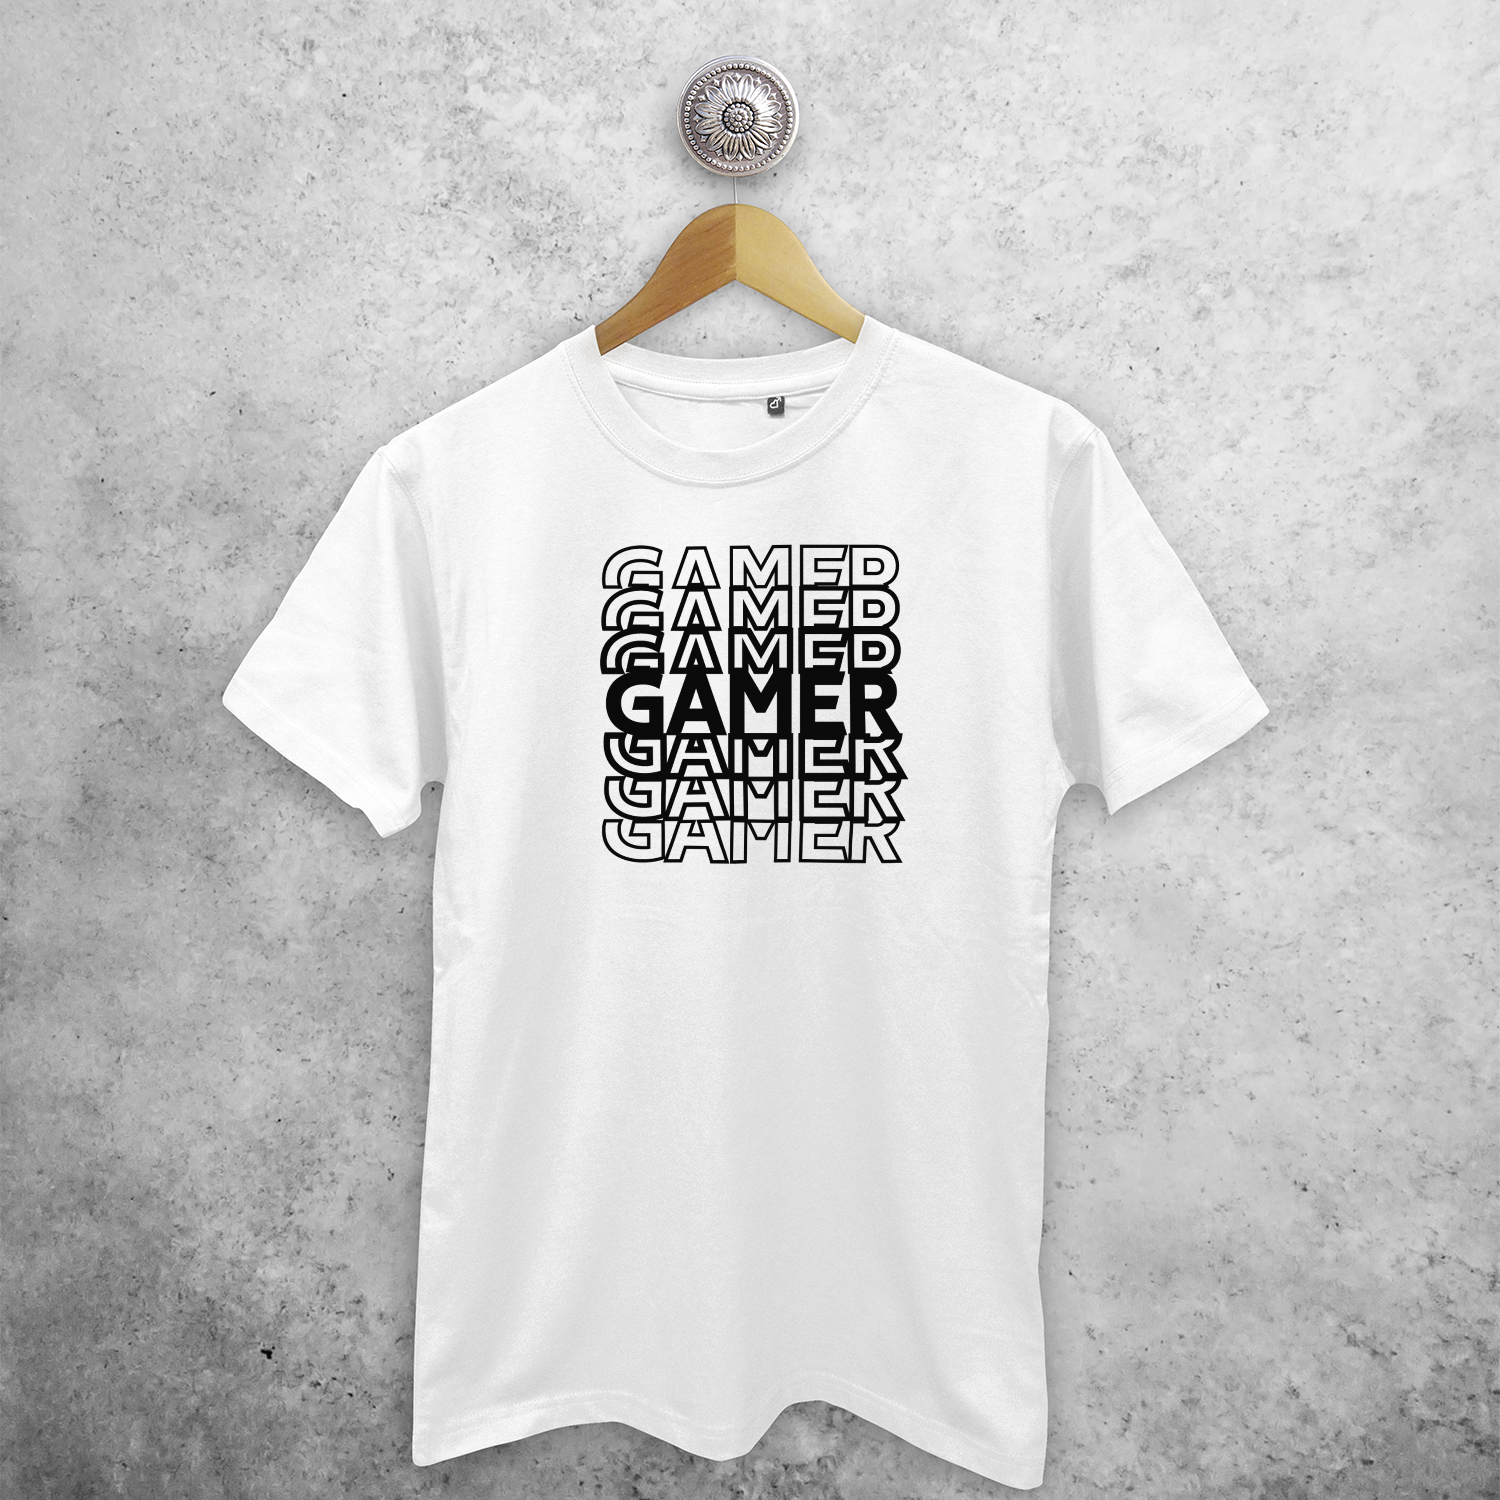 'Gamer' adult shirt